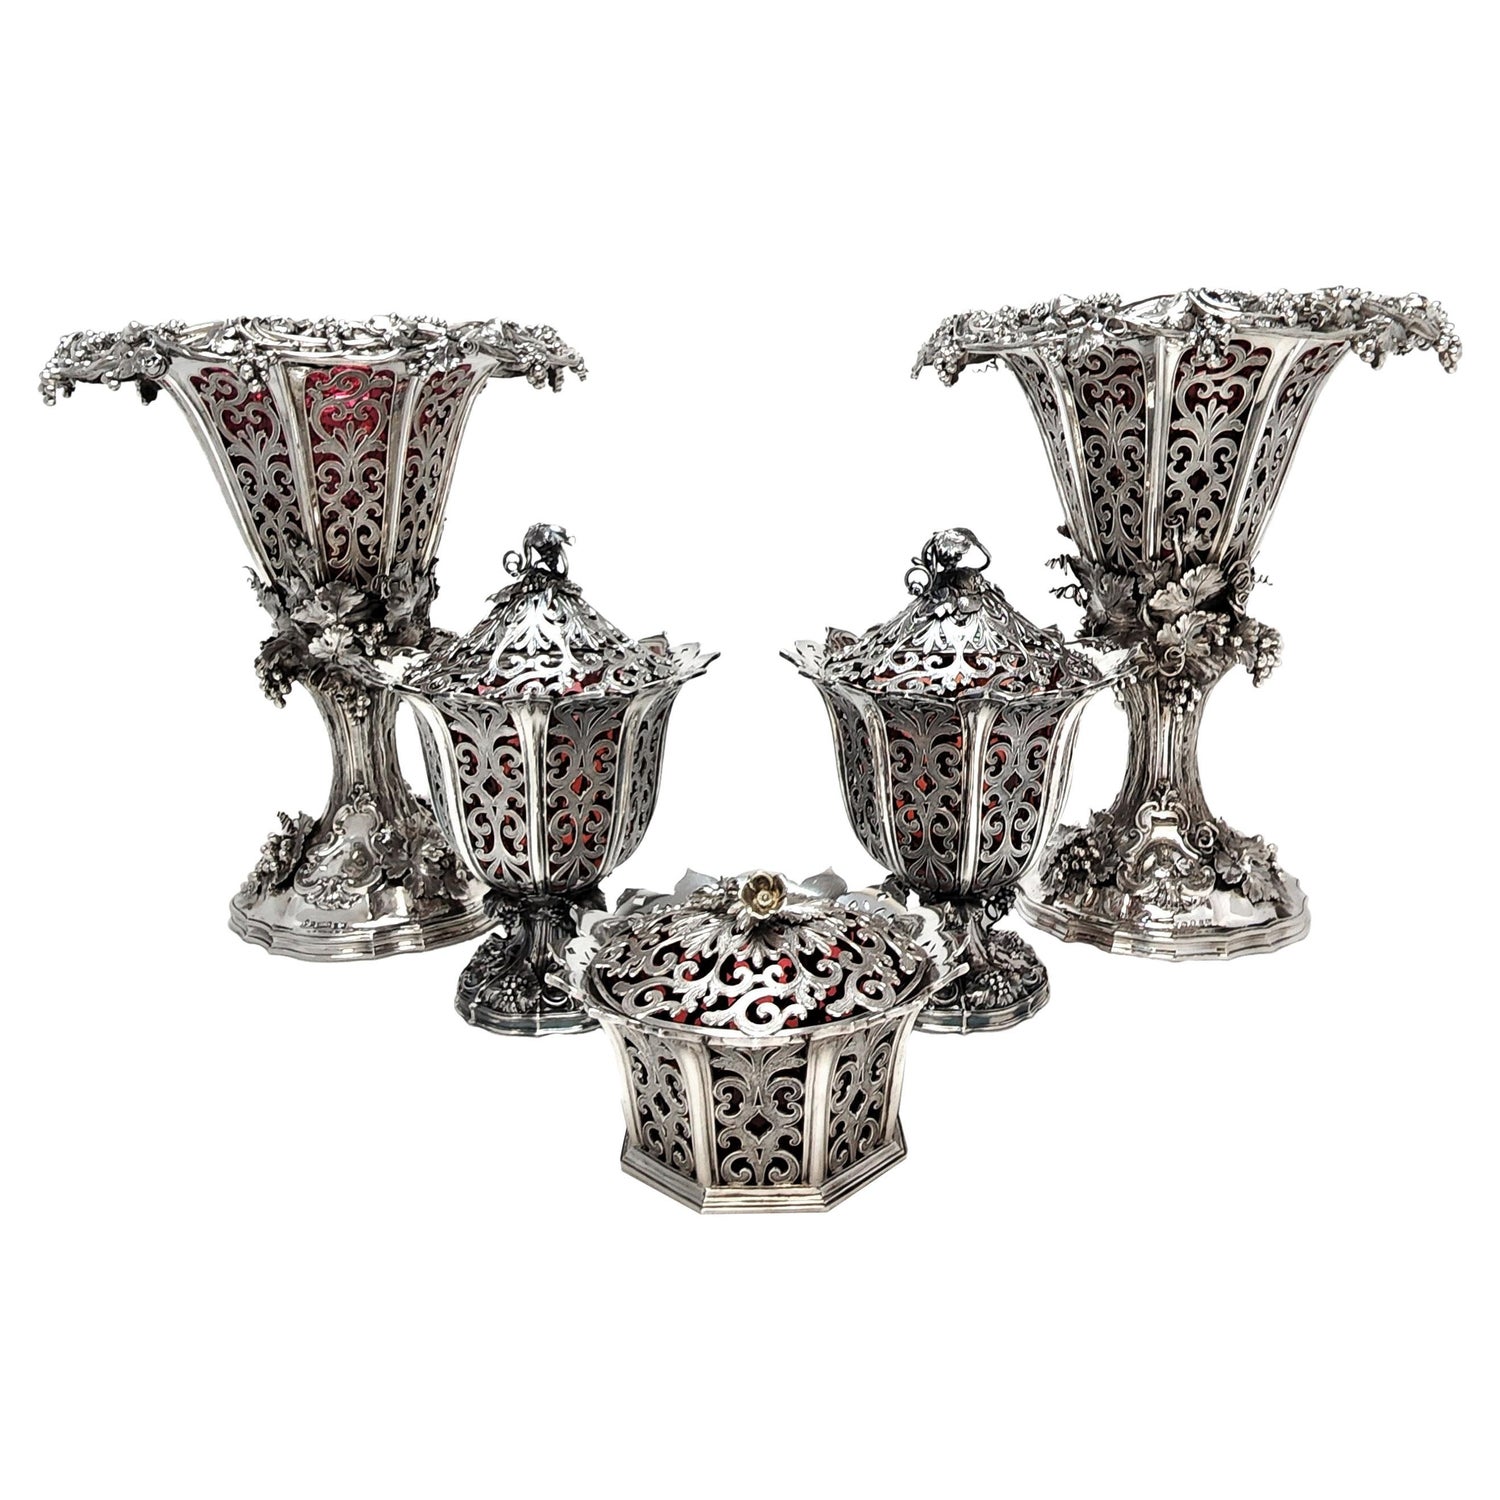 Antique Victorian Silver Table Garniture Centrepiece Vases Condiment 1843 - 46